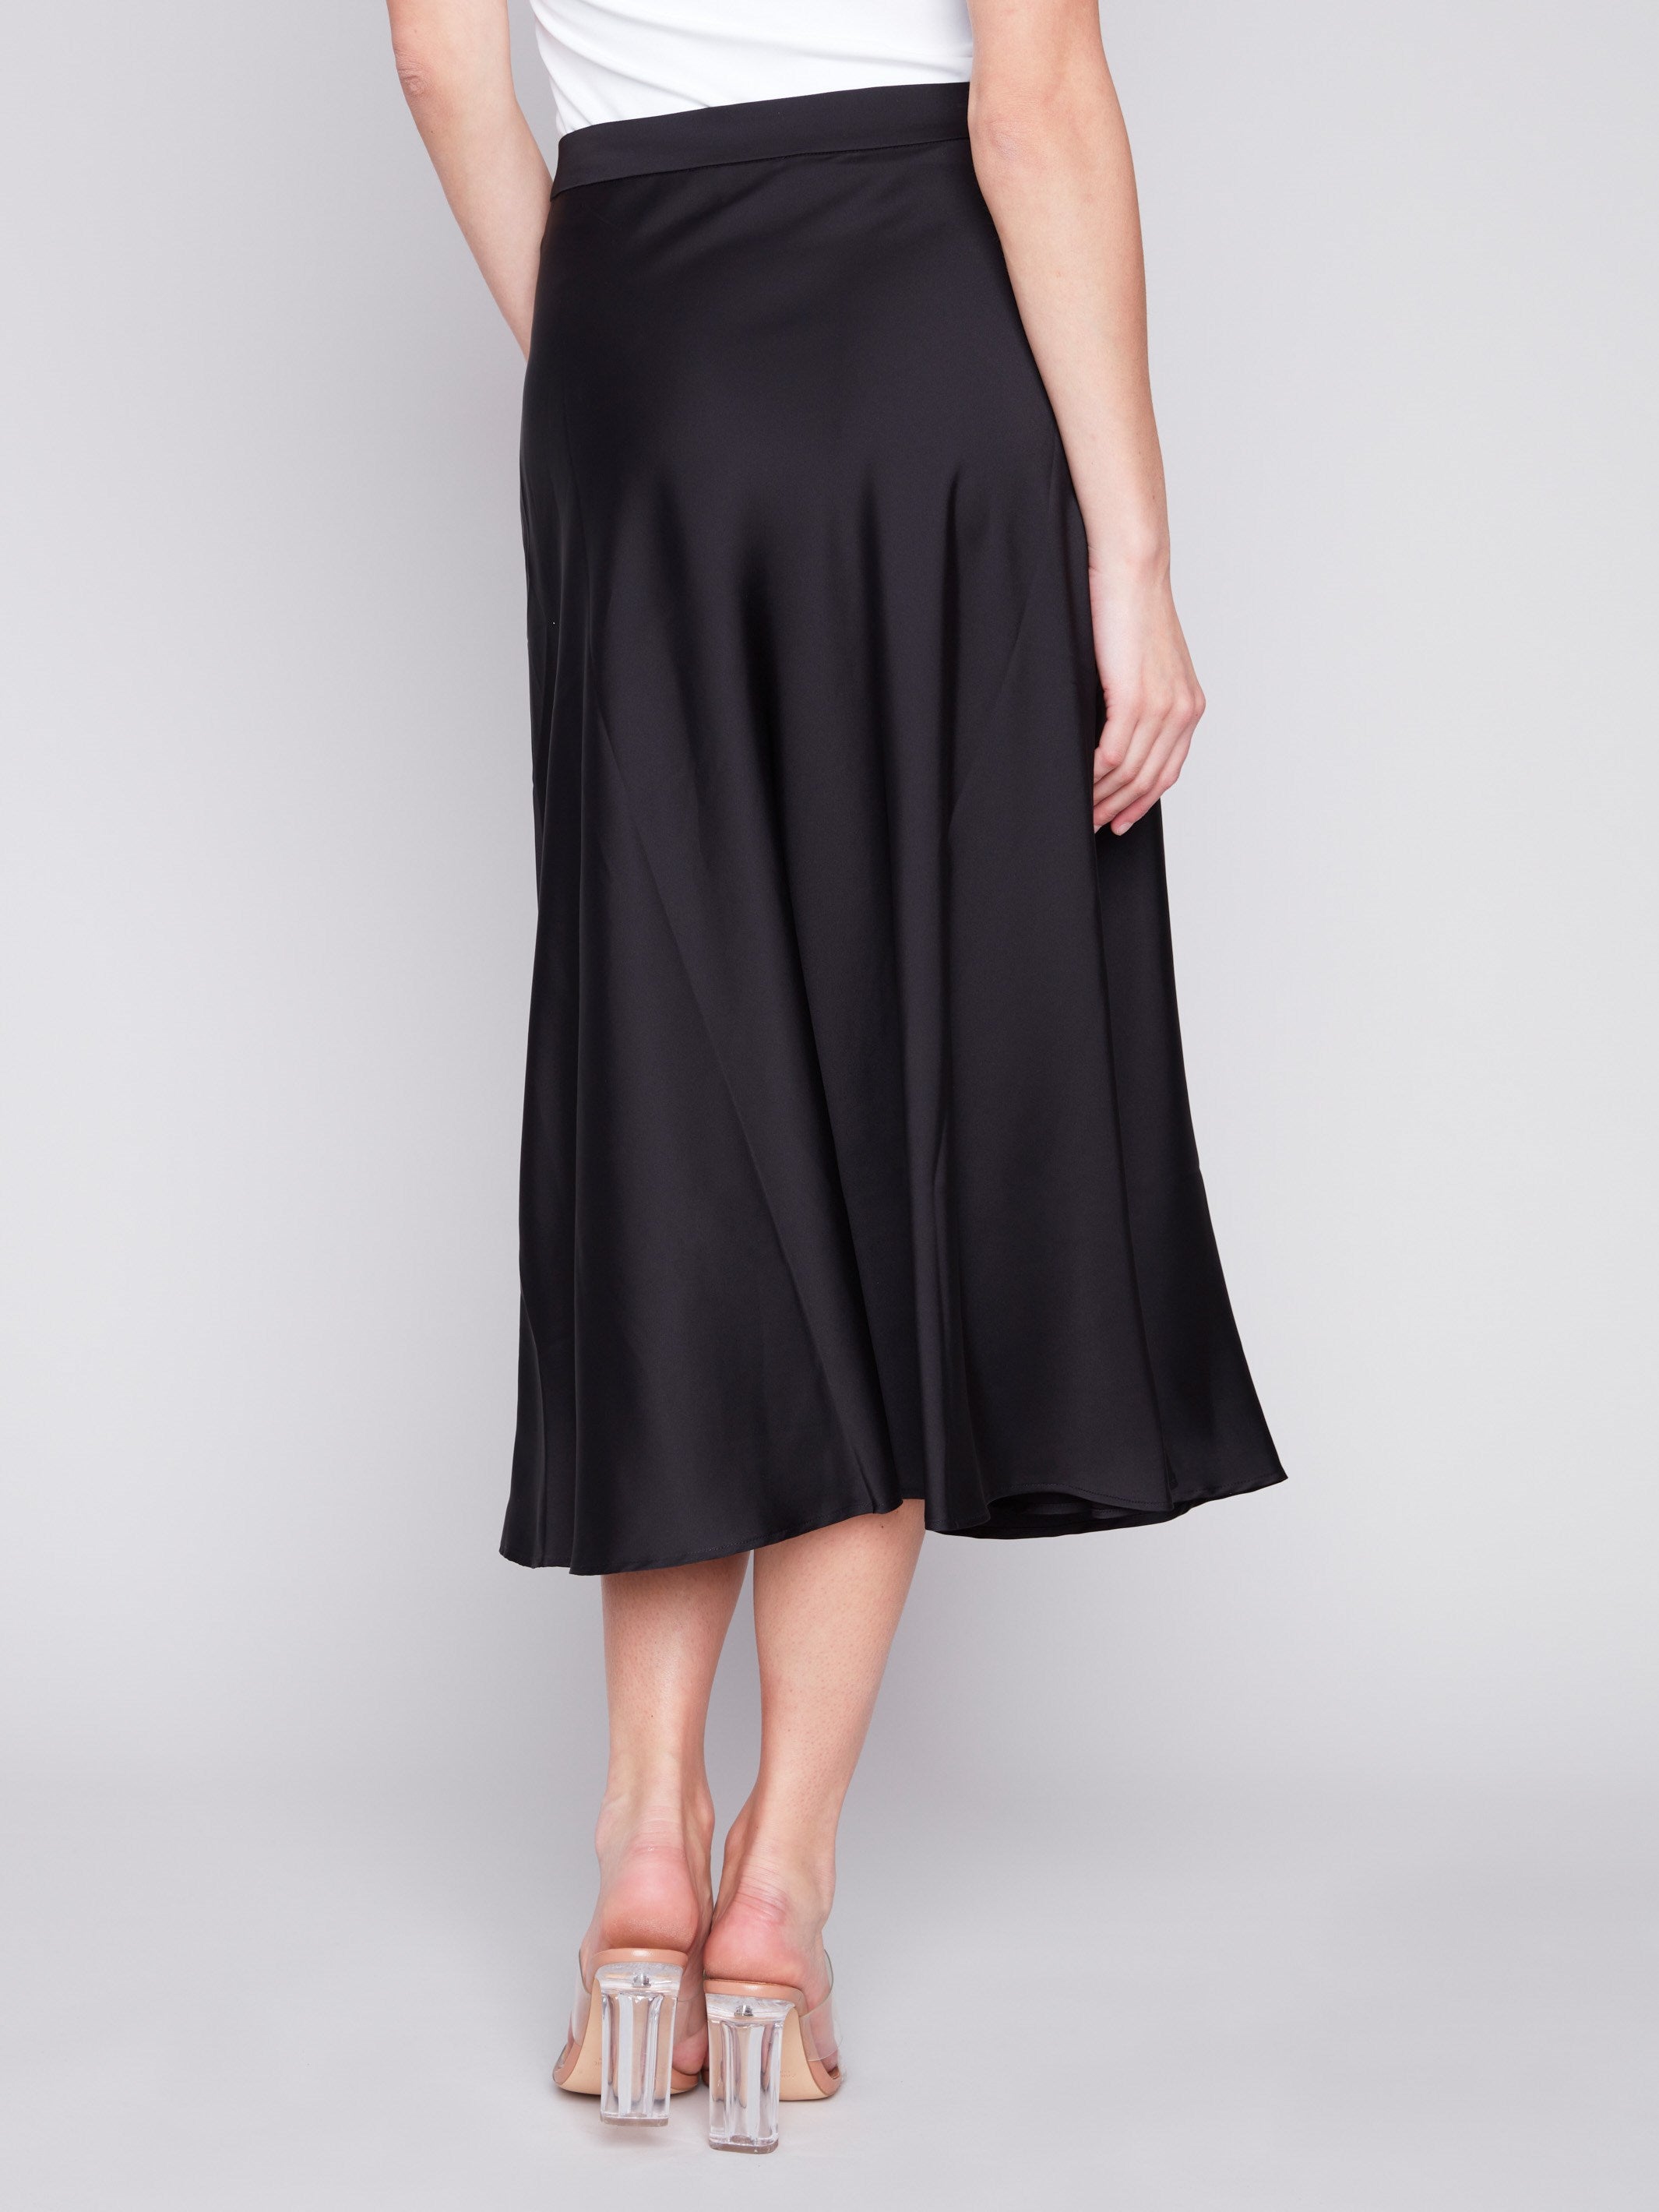 Long Satin Skirt - Black - Charlie B Collection Canada - Image 5